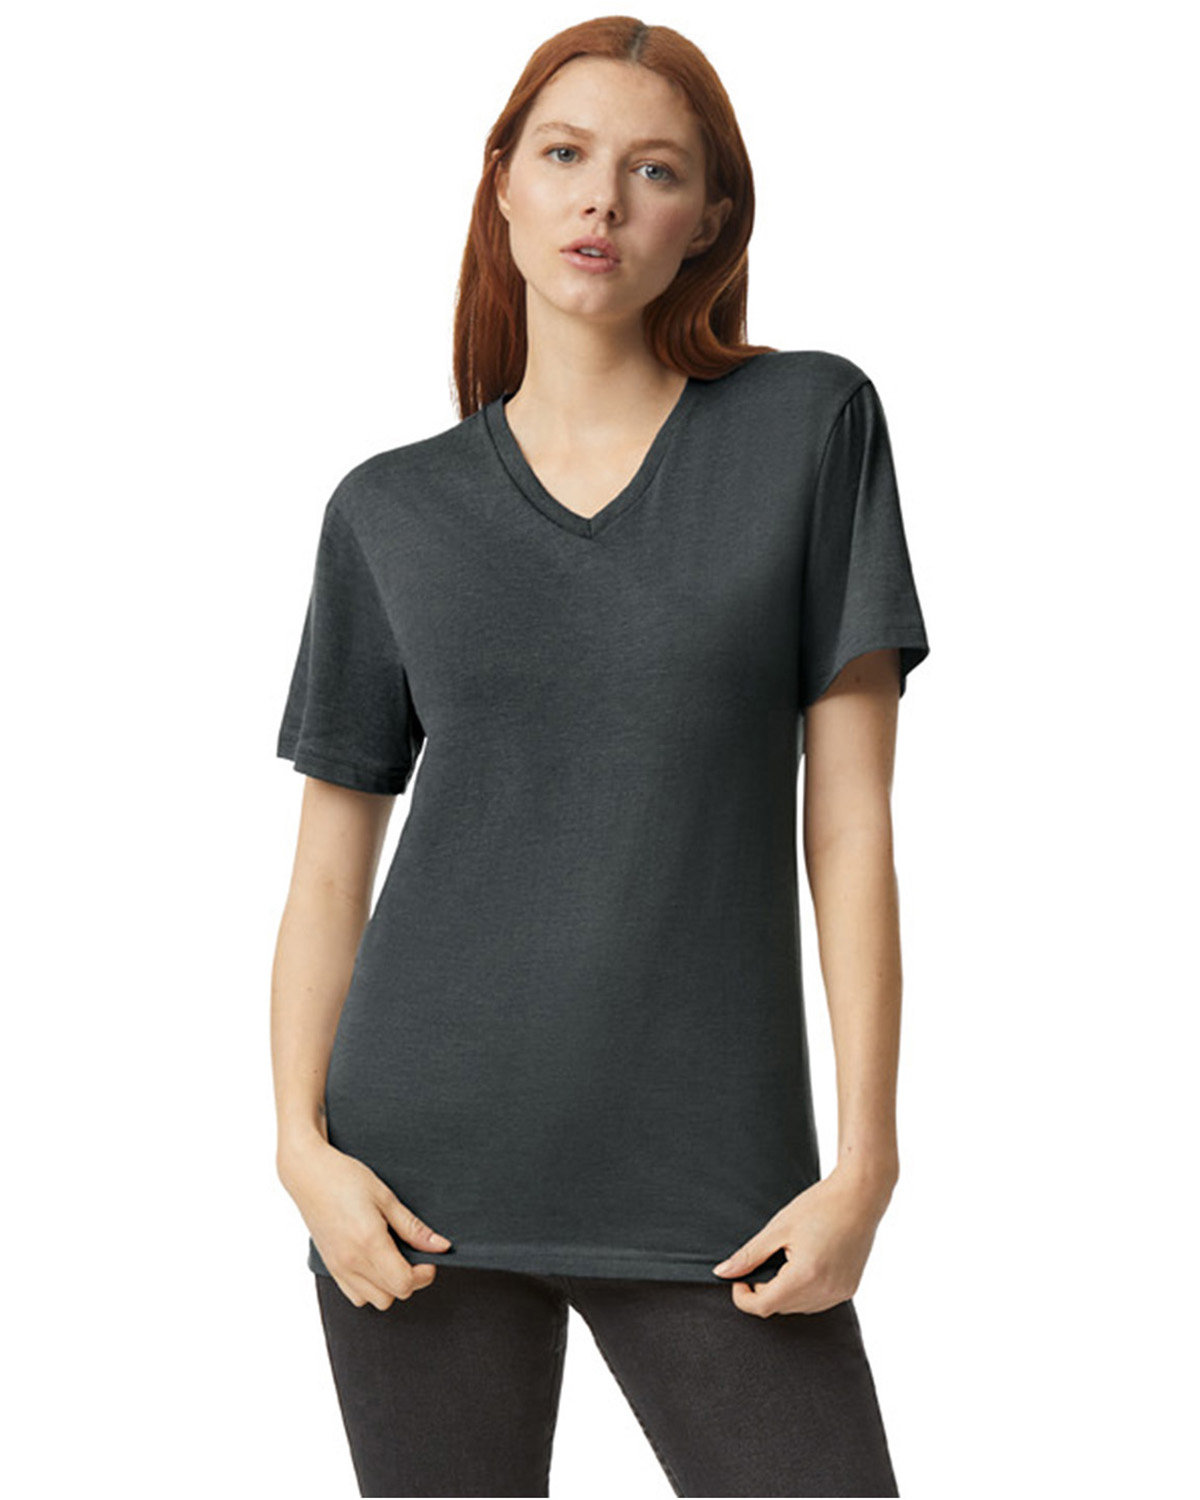 American Apparel Unisex CVC V-Neck T-Shirt HEATHER CHARCOAL 